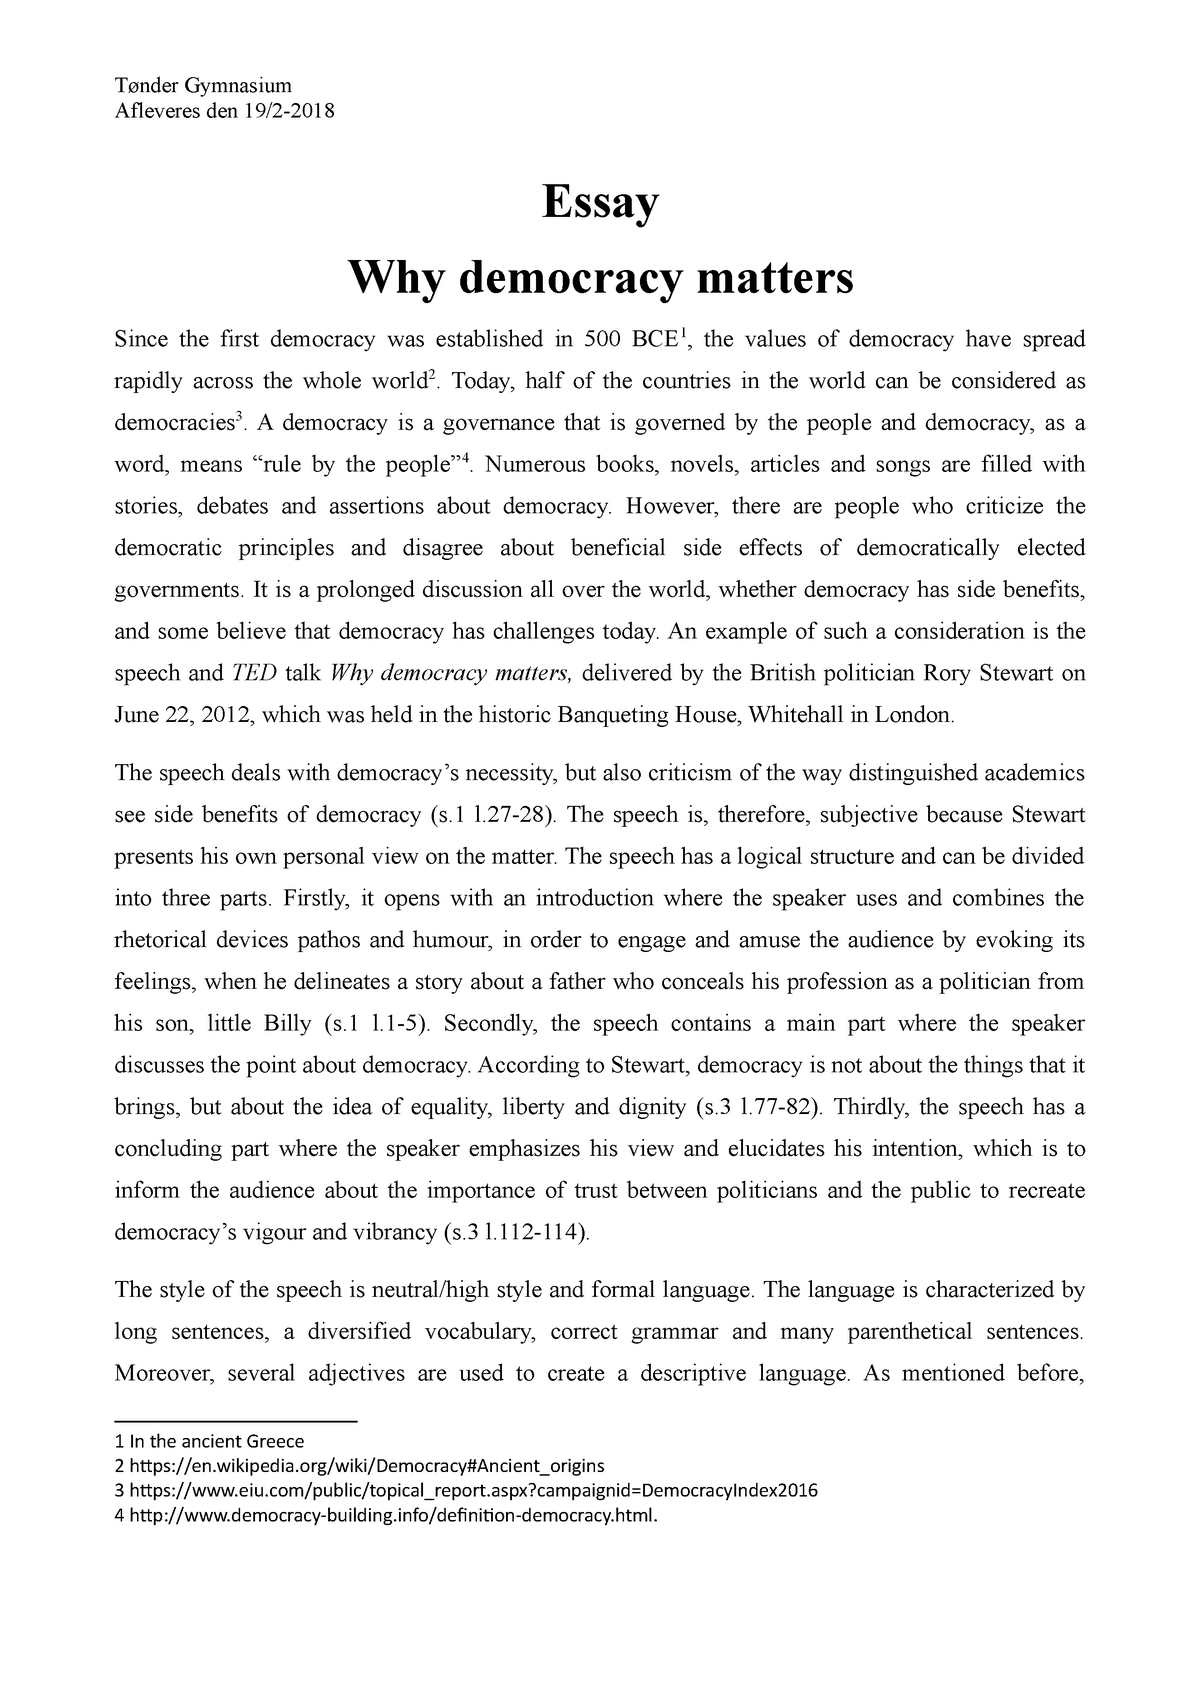 democracy works essay